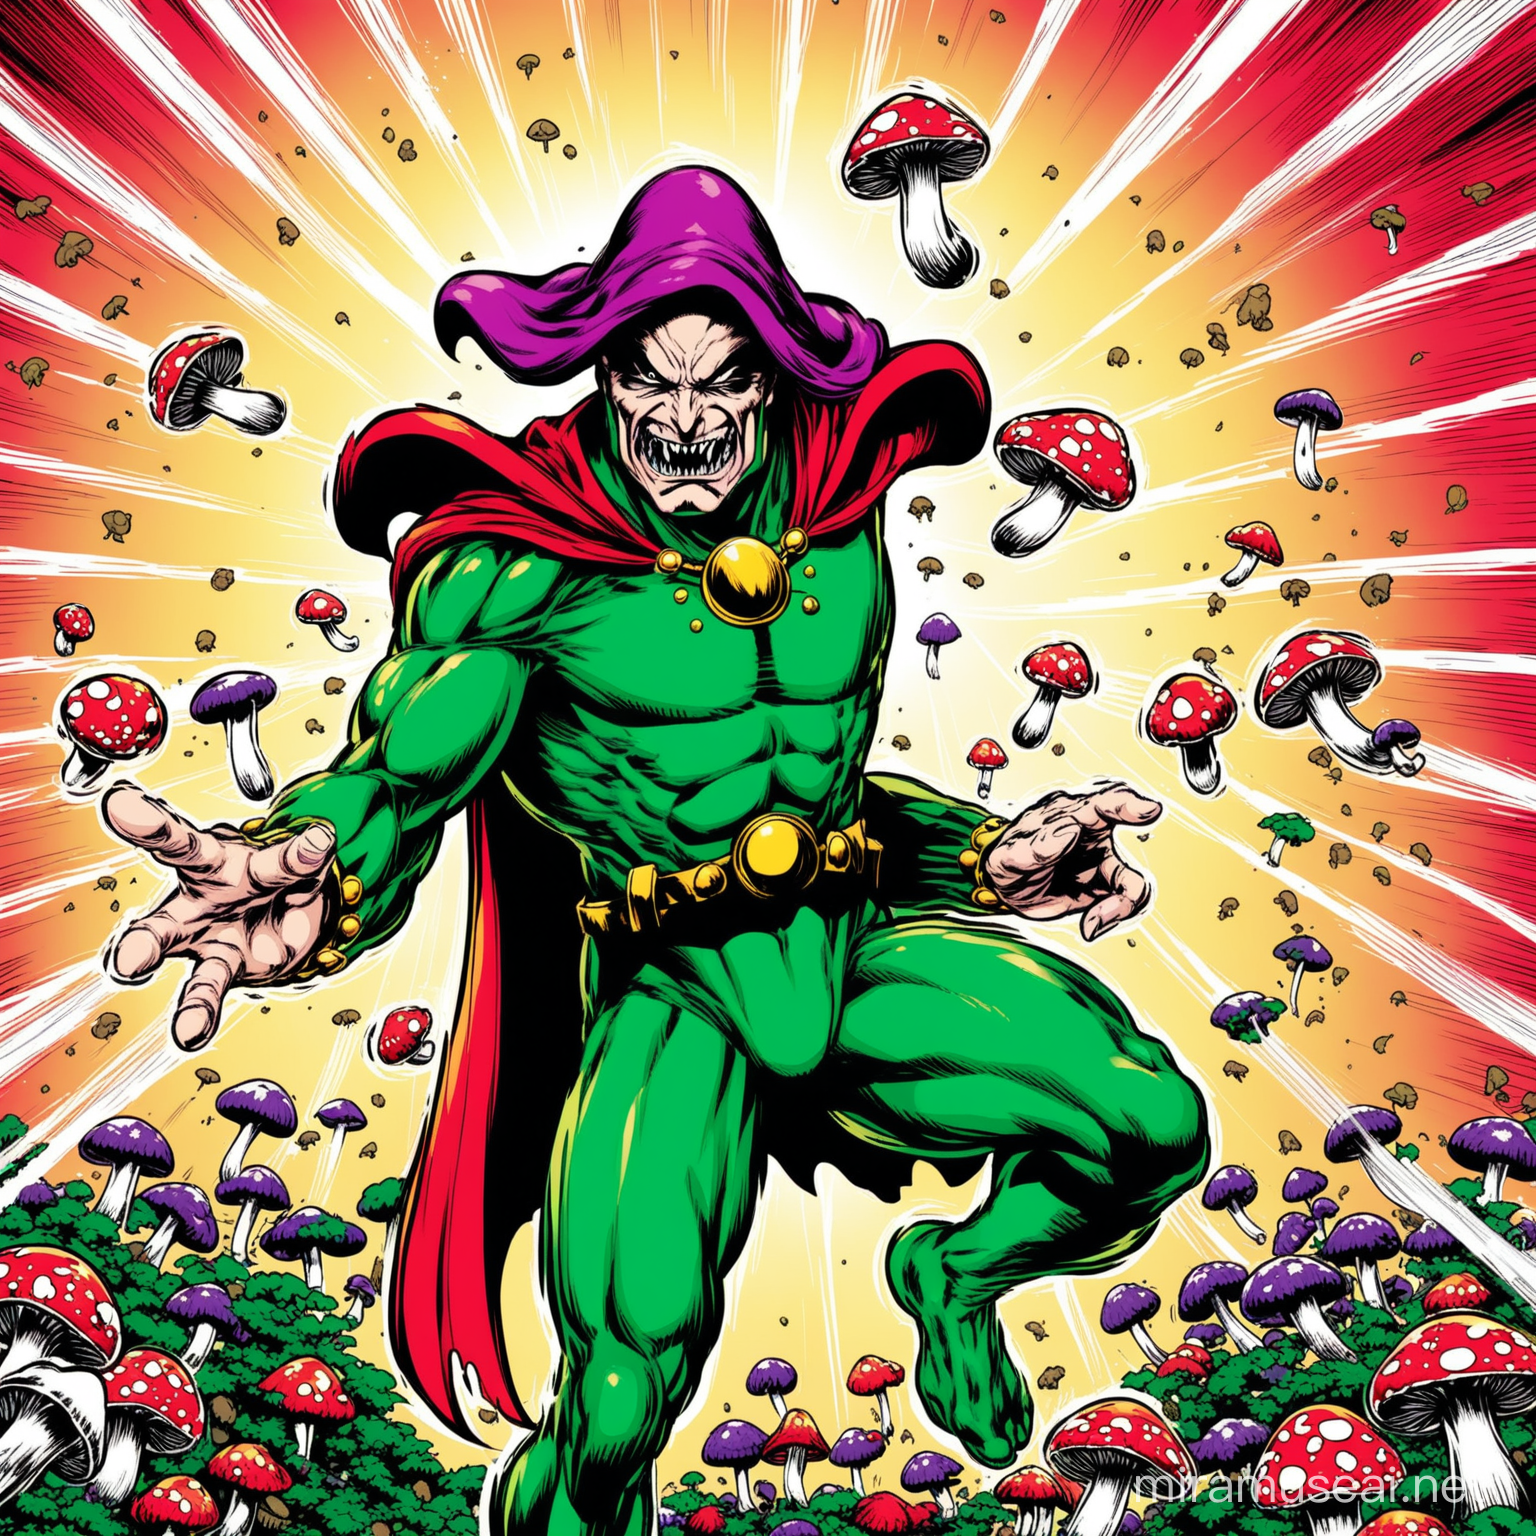 Sinister Comic Book Villain Throwing Poisonous Mushrooms